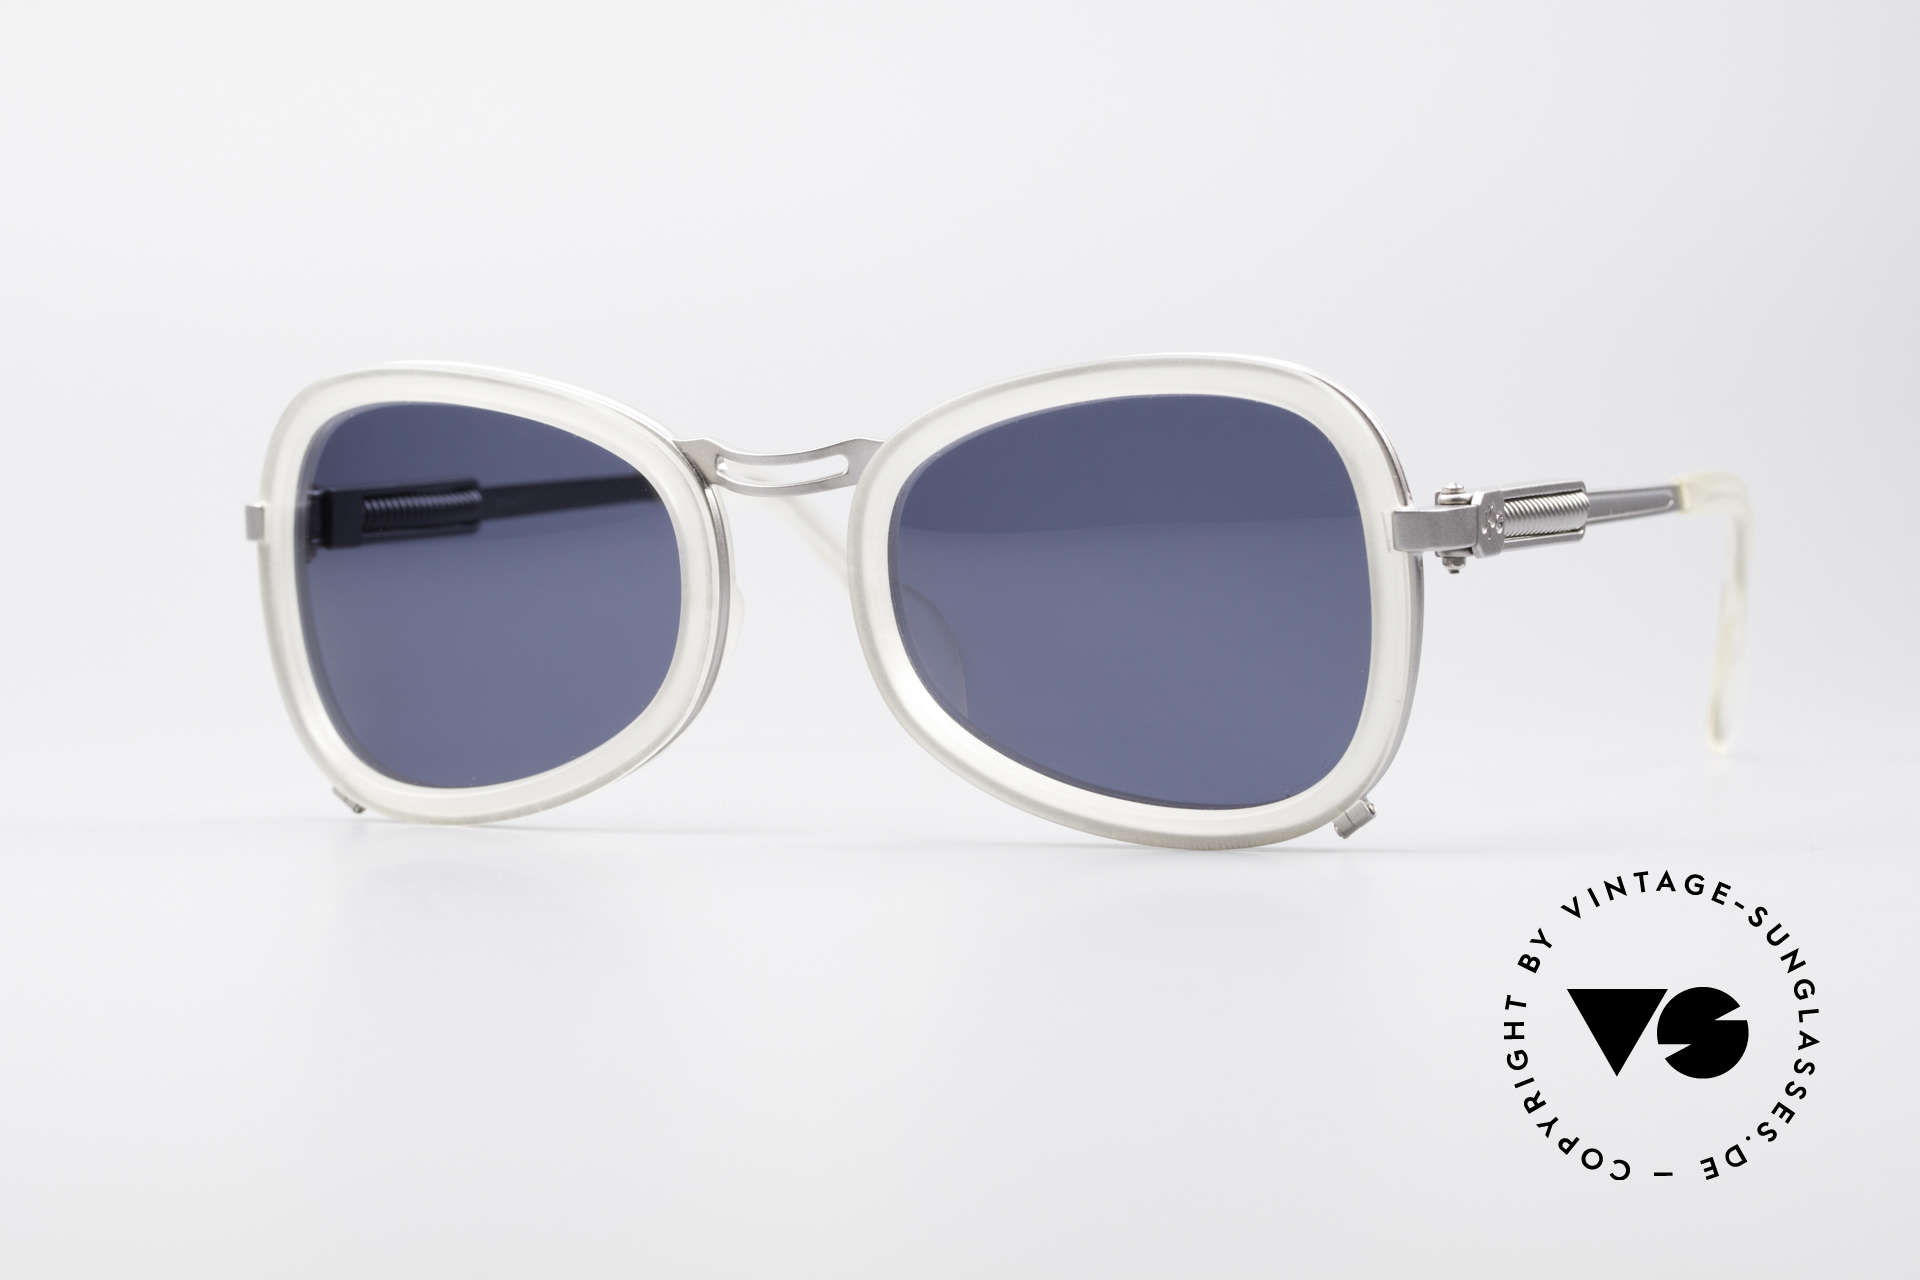 Jean Paul Gaultier 56-1271 90's Steampunk Sunglasses, massive Jean Paul GAULTIER 1990's designer sunglasses, Made for Men and Women